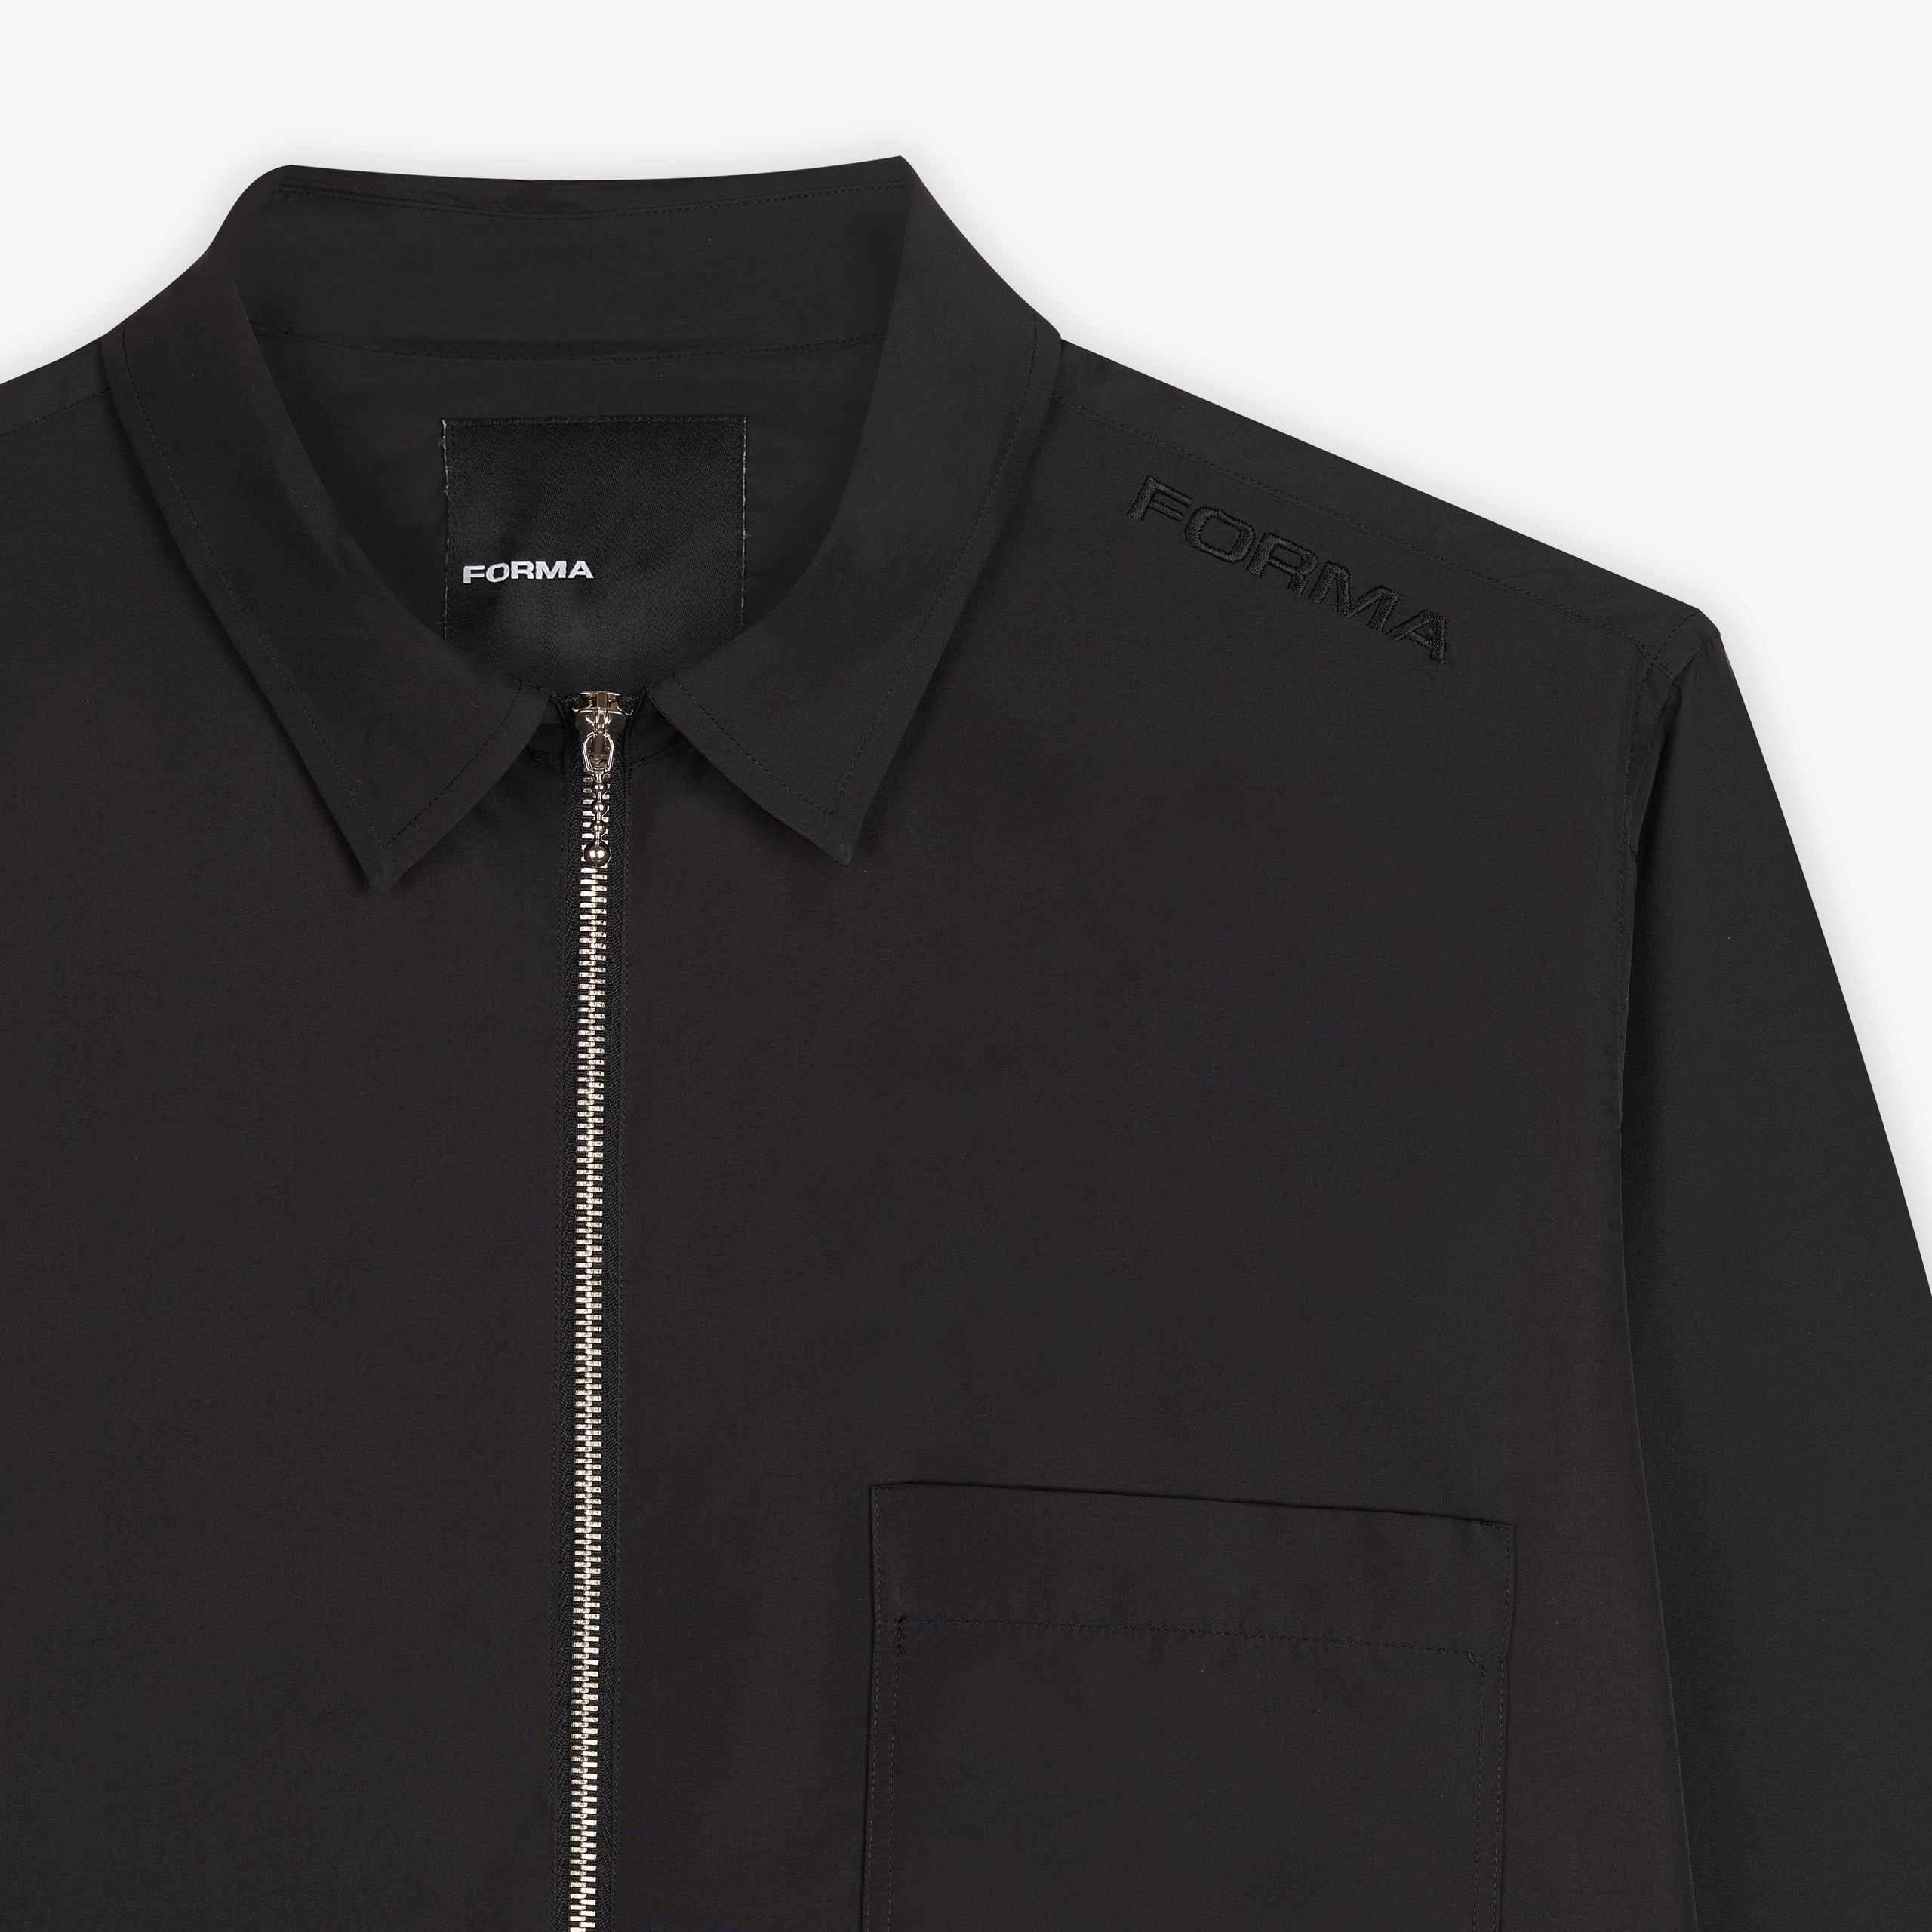 Forma zip shirt black